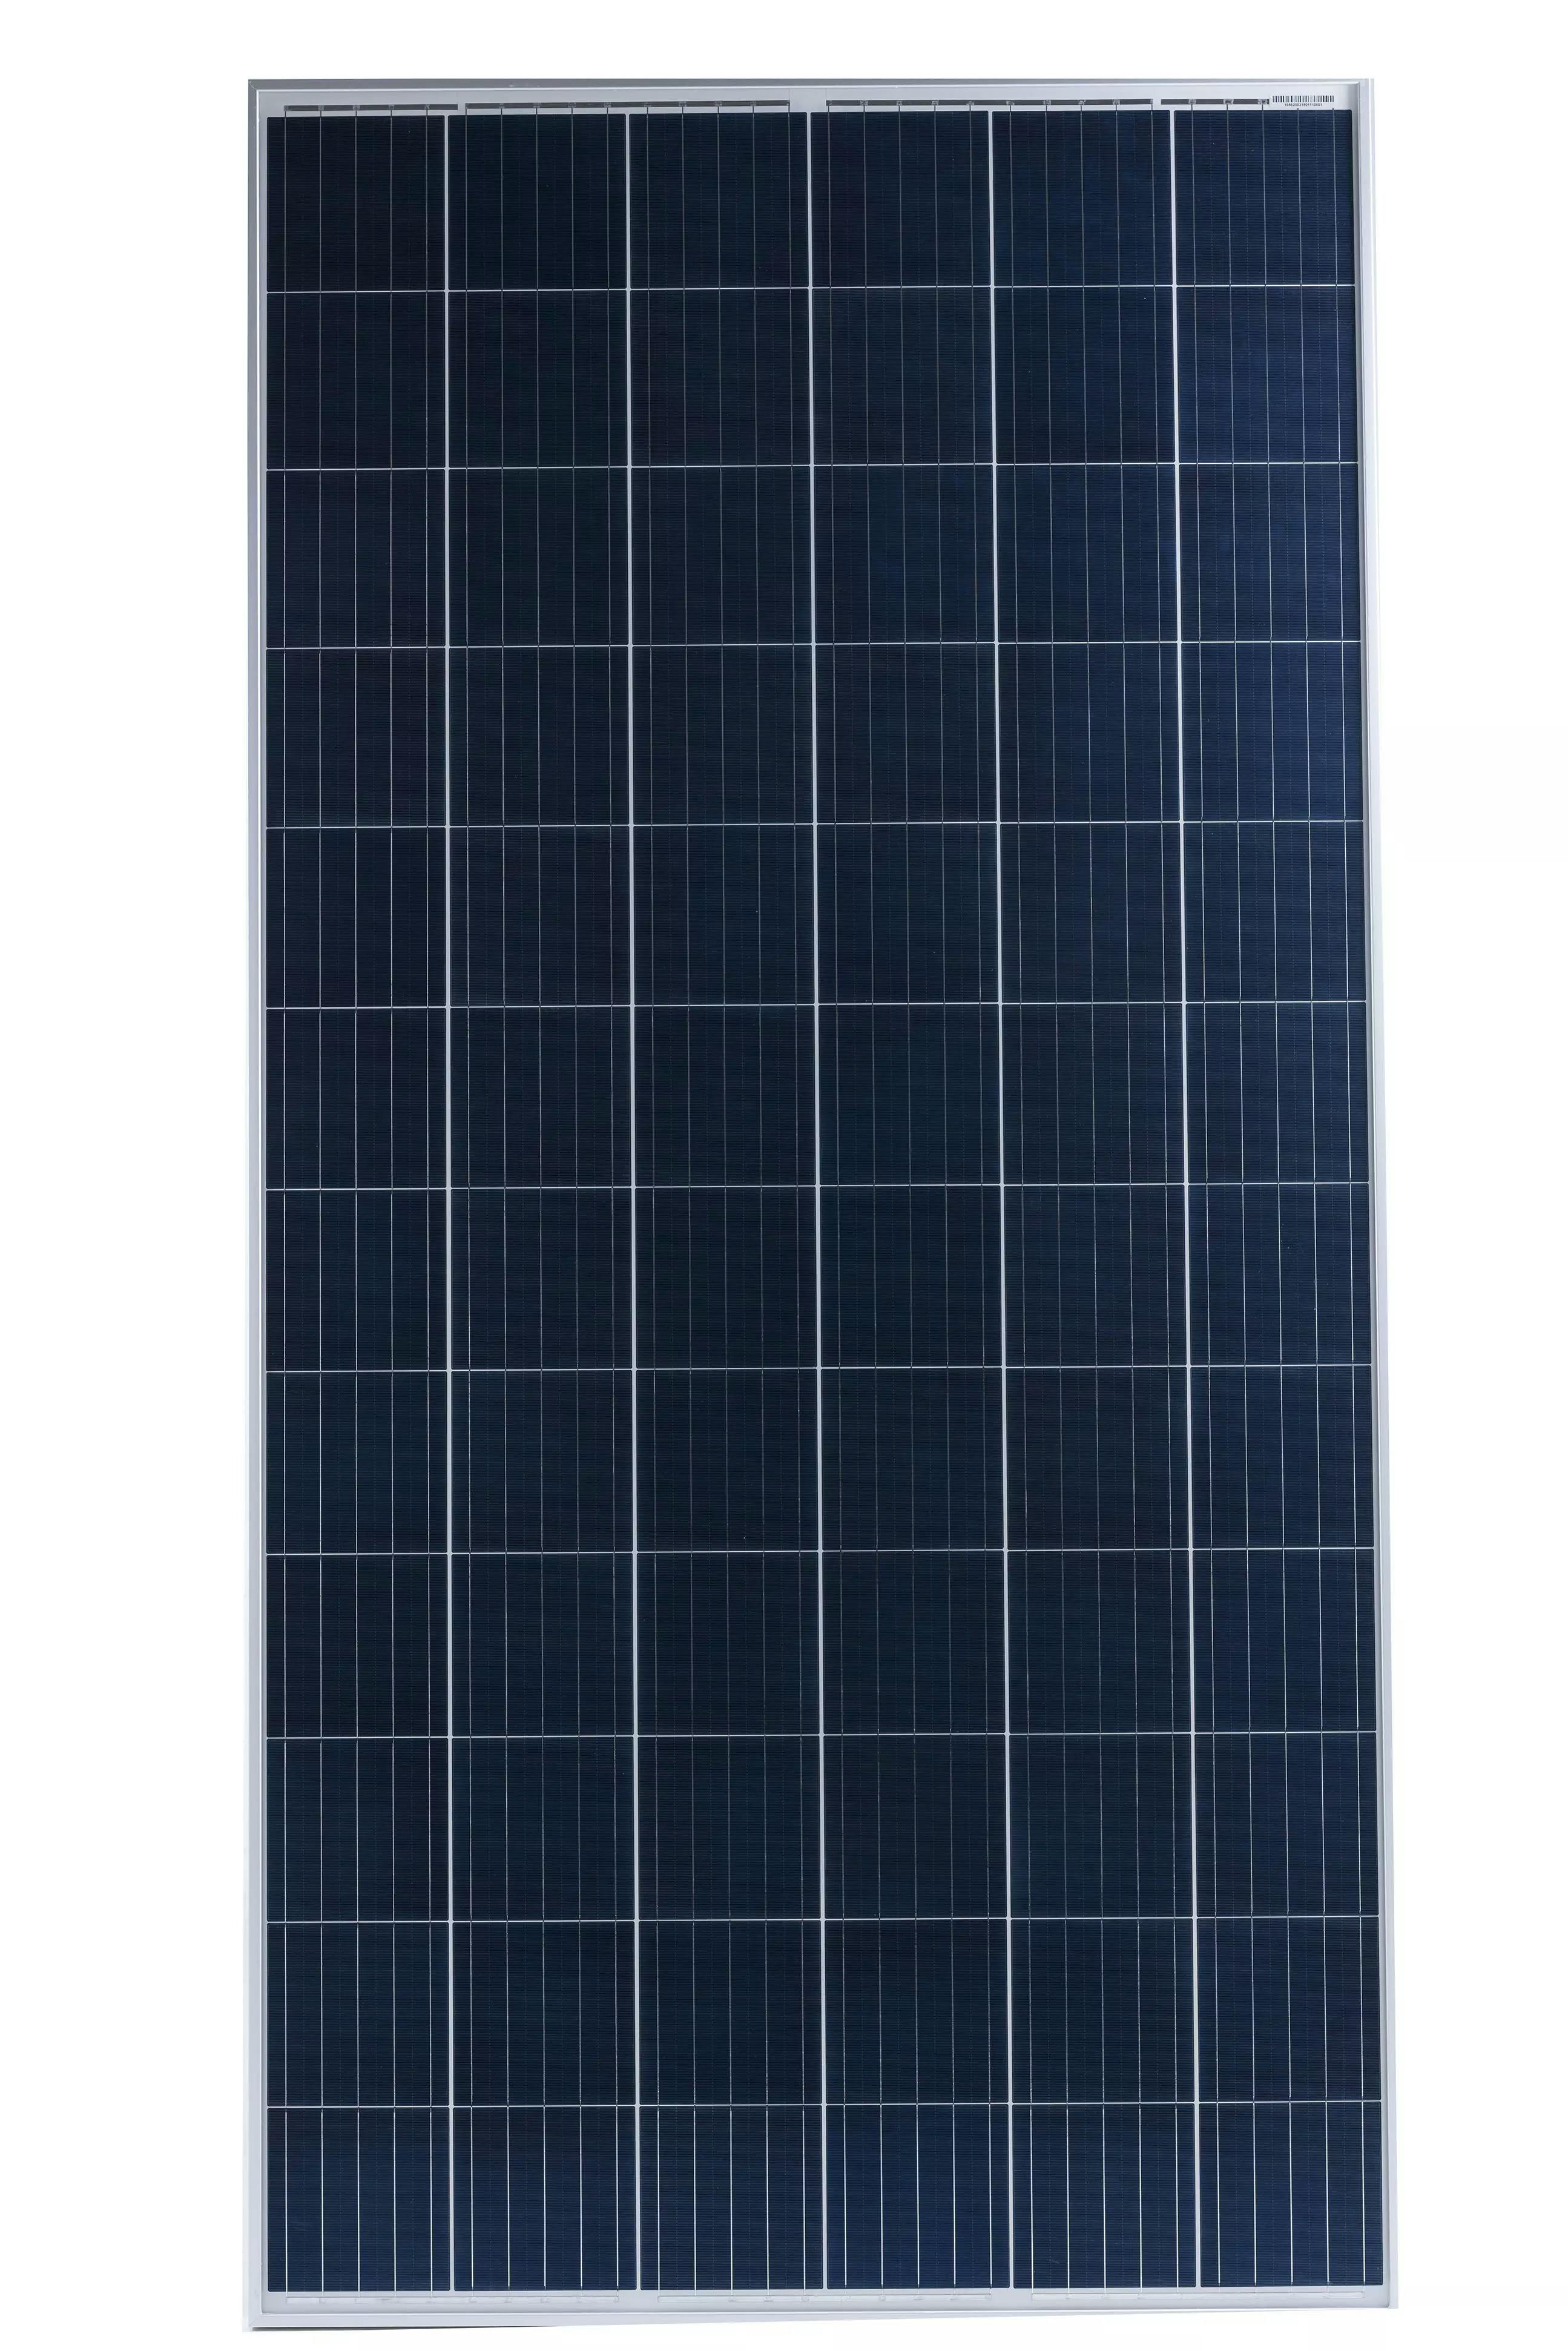 EnergyPal Eco Green Energy Solar Panels EGE-330-350P-72 EGE-350P-72